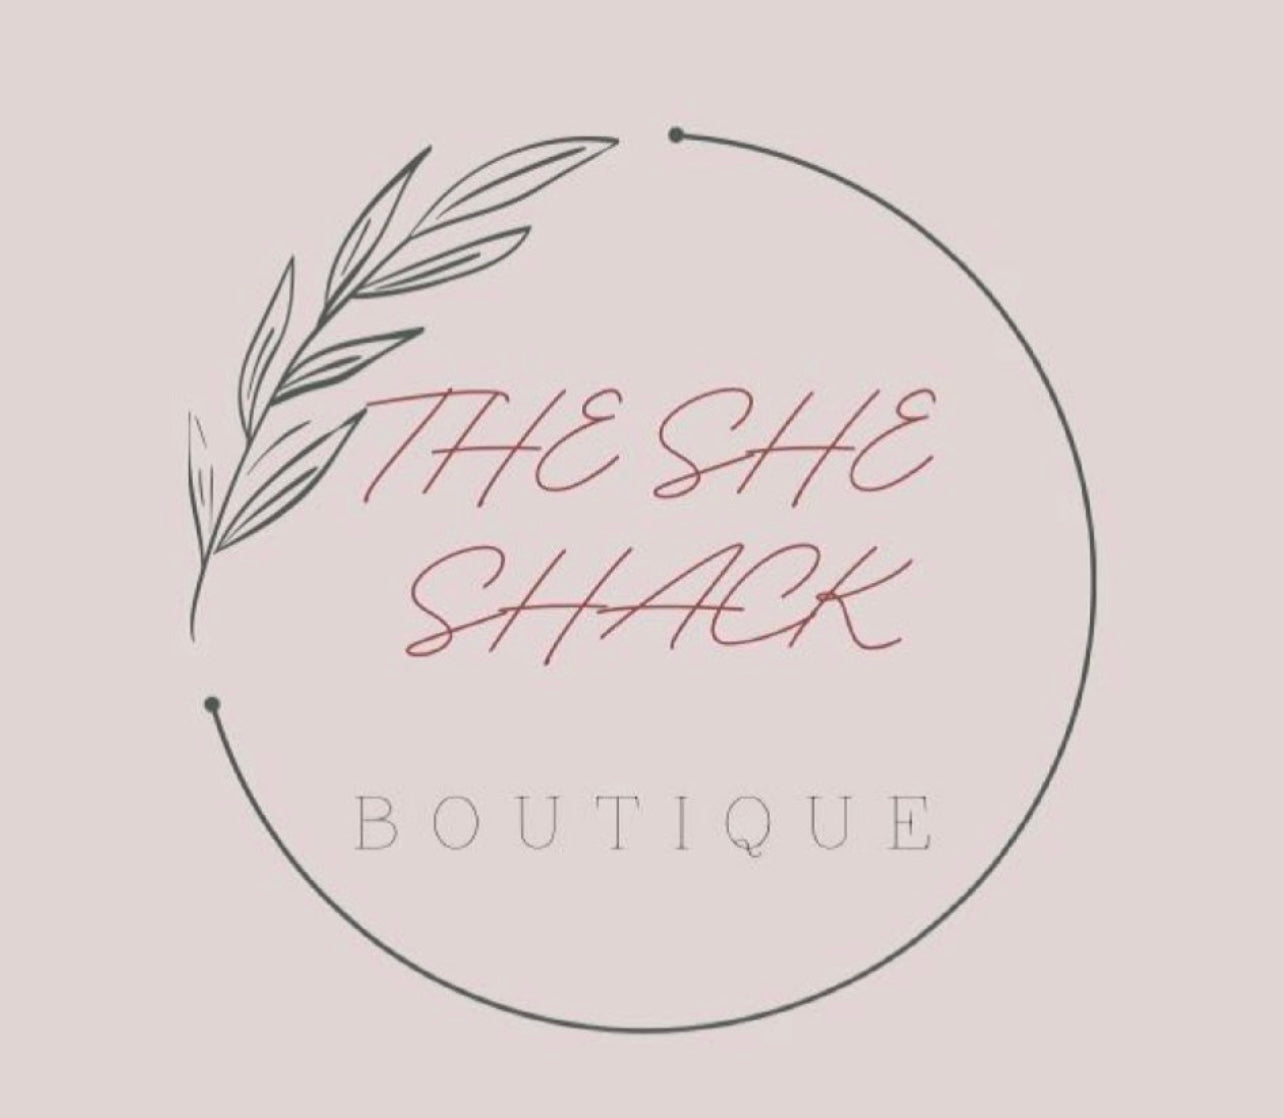 40oz light purple stanley – The She Shack Boutique